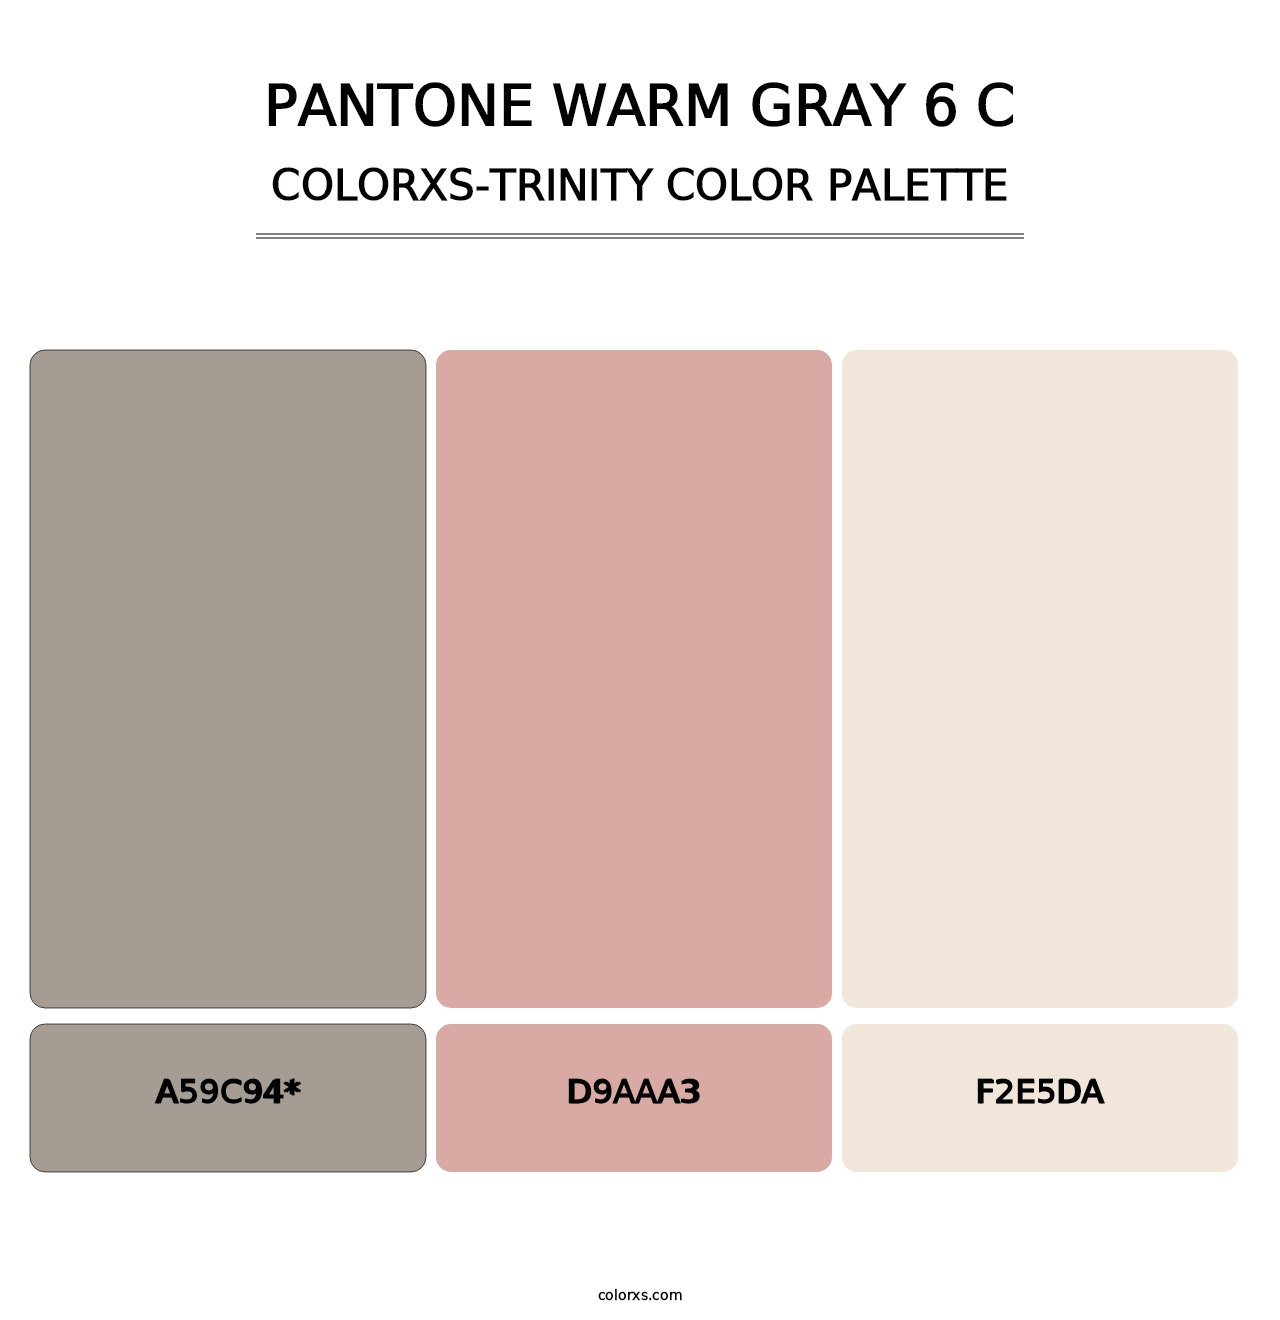 PANTONE Warm Gray 6 C - Colorxs Trinity Palette